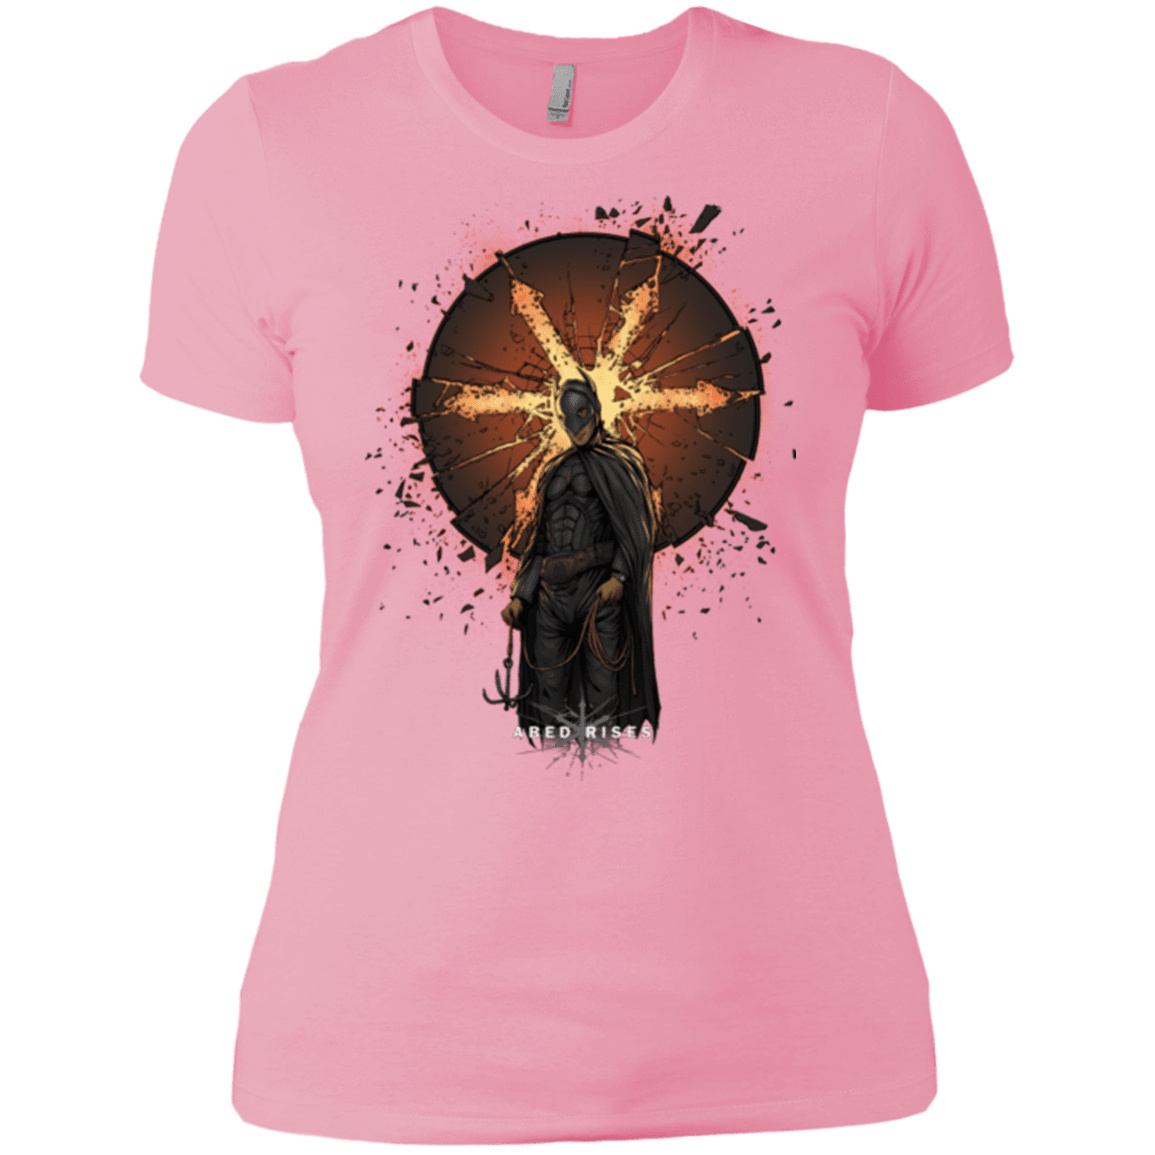 T-Shirts Light Pink / X-Small Abed Rises Women's Premium T-Shirt